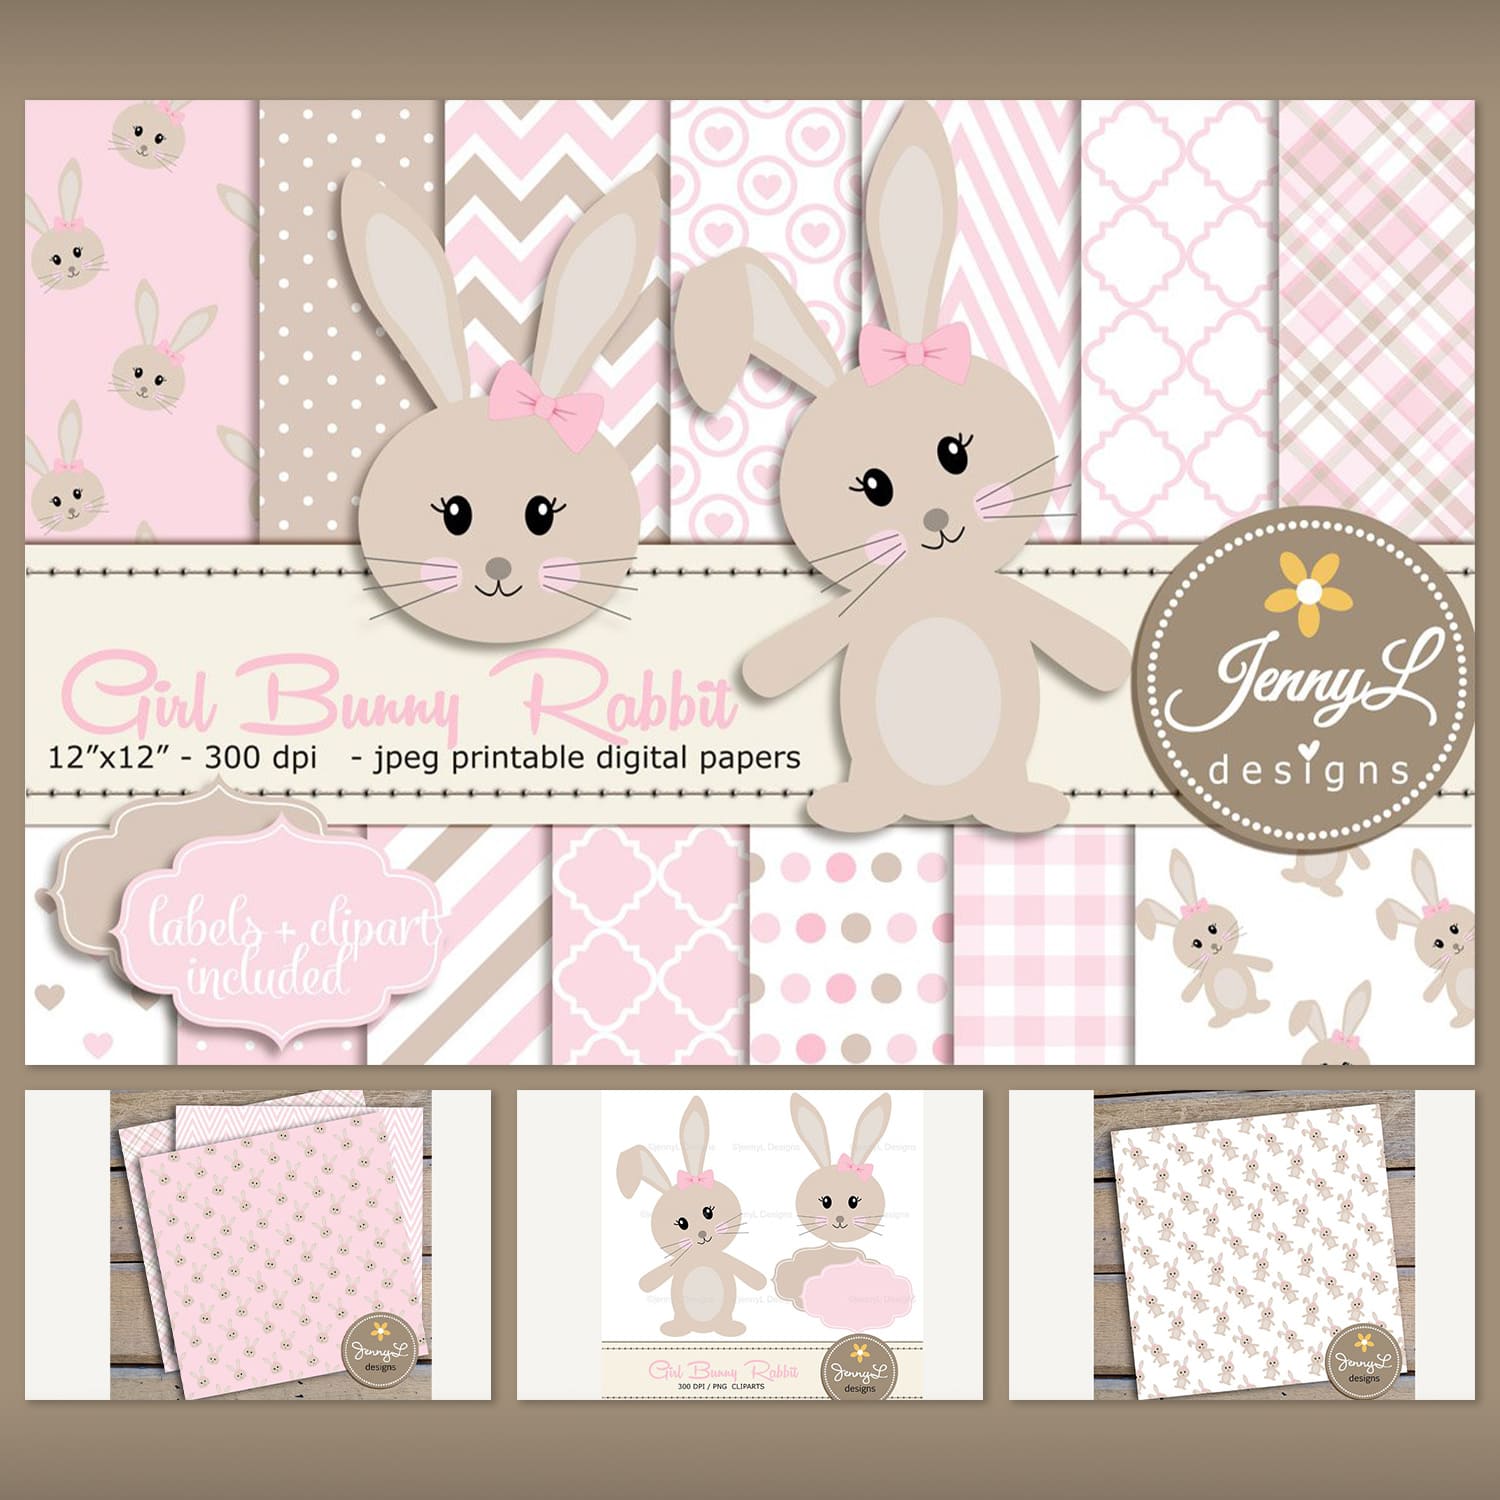 Save Girl Bunny Rabbit Digital Paper.